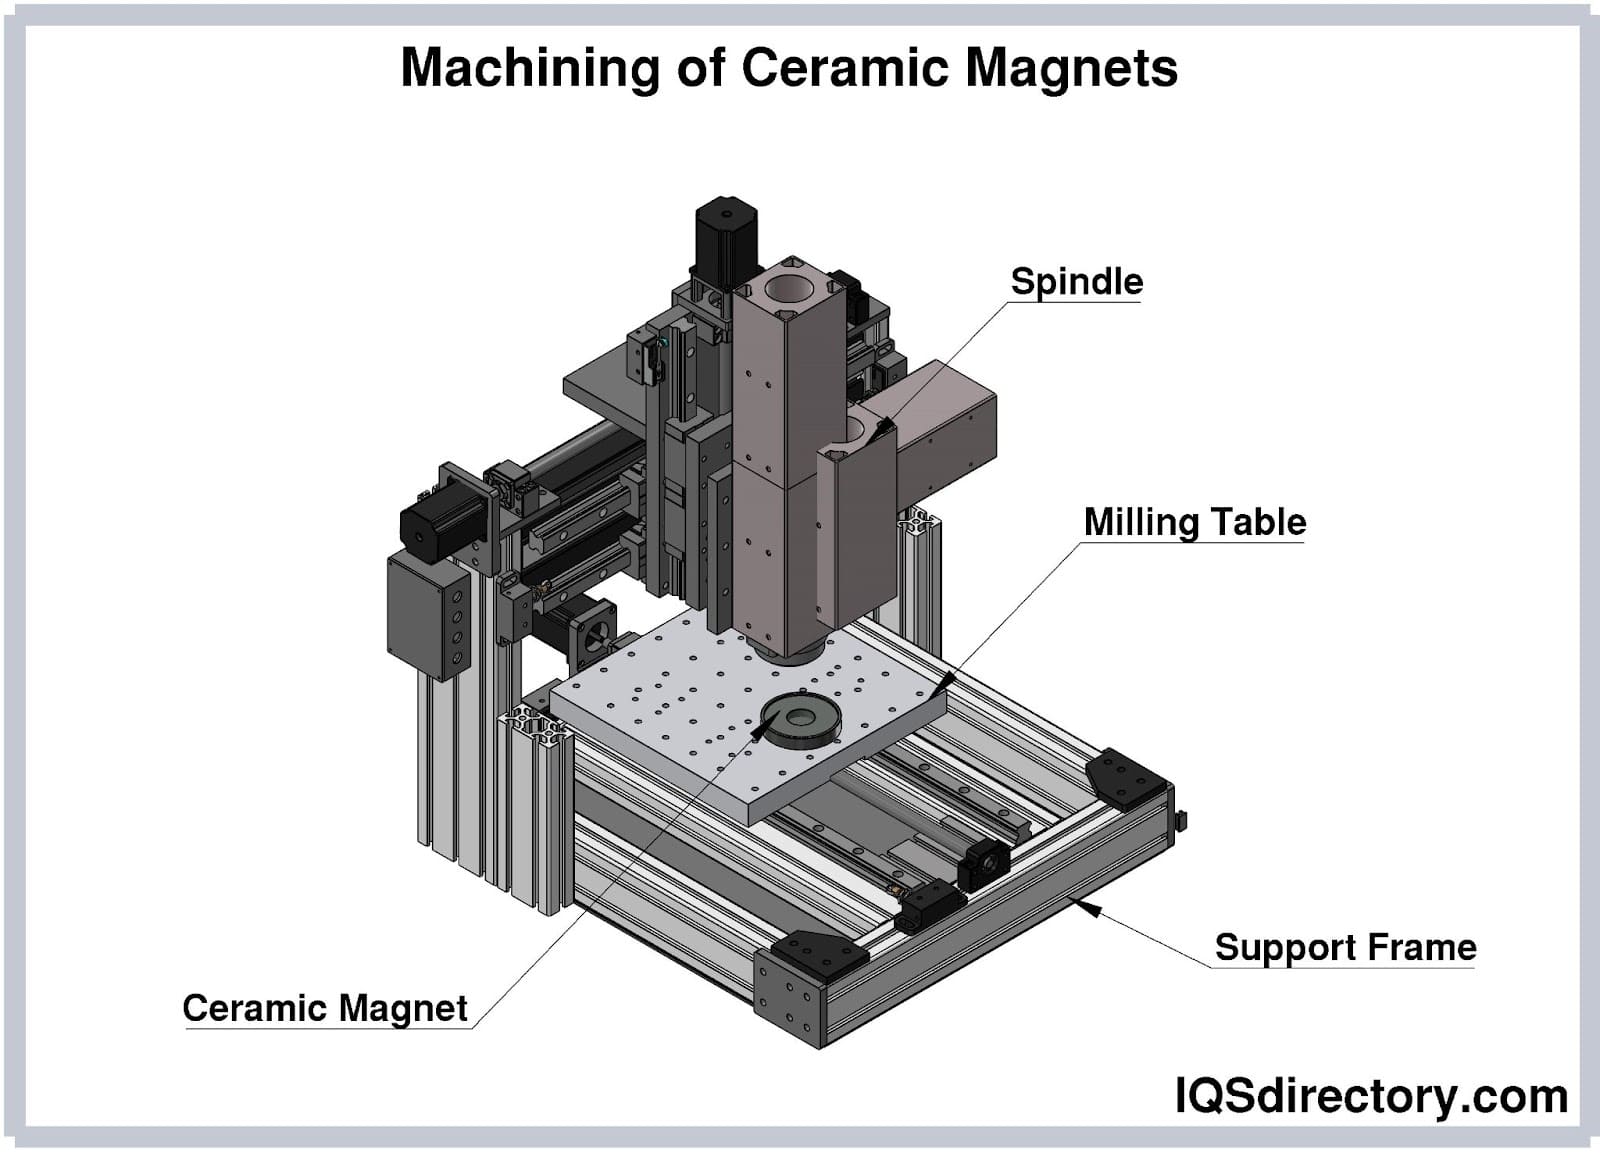 Machining of Ceramic Magnets